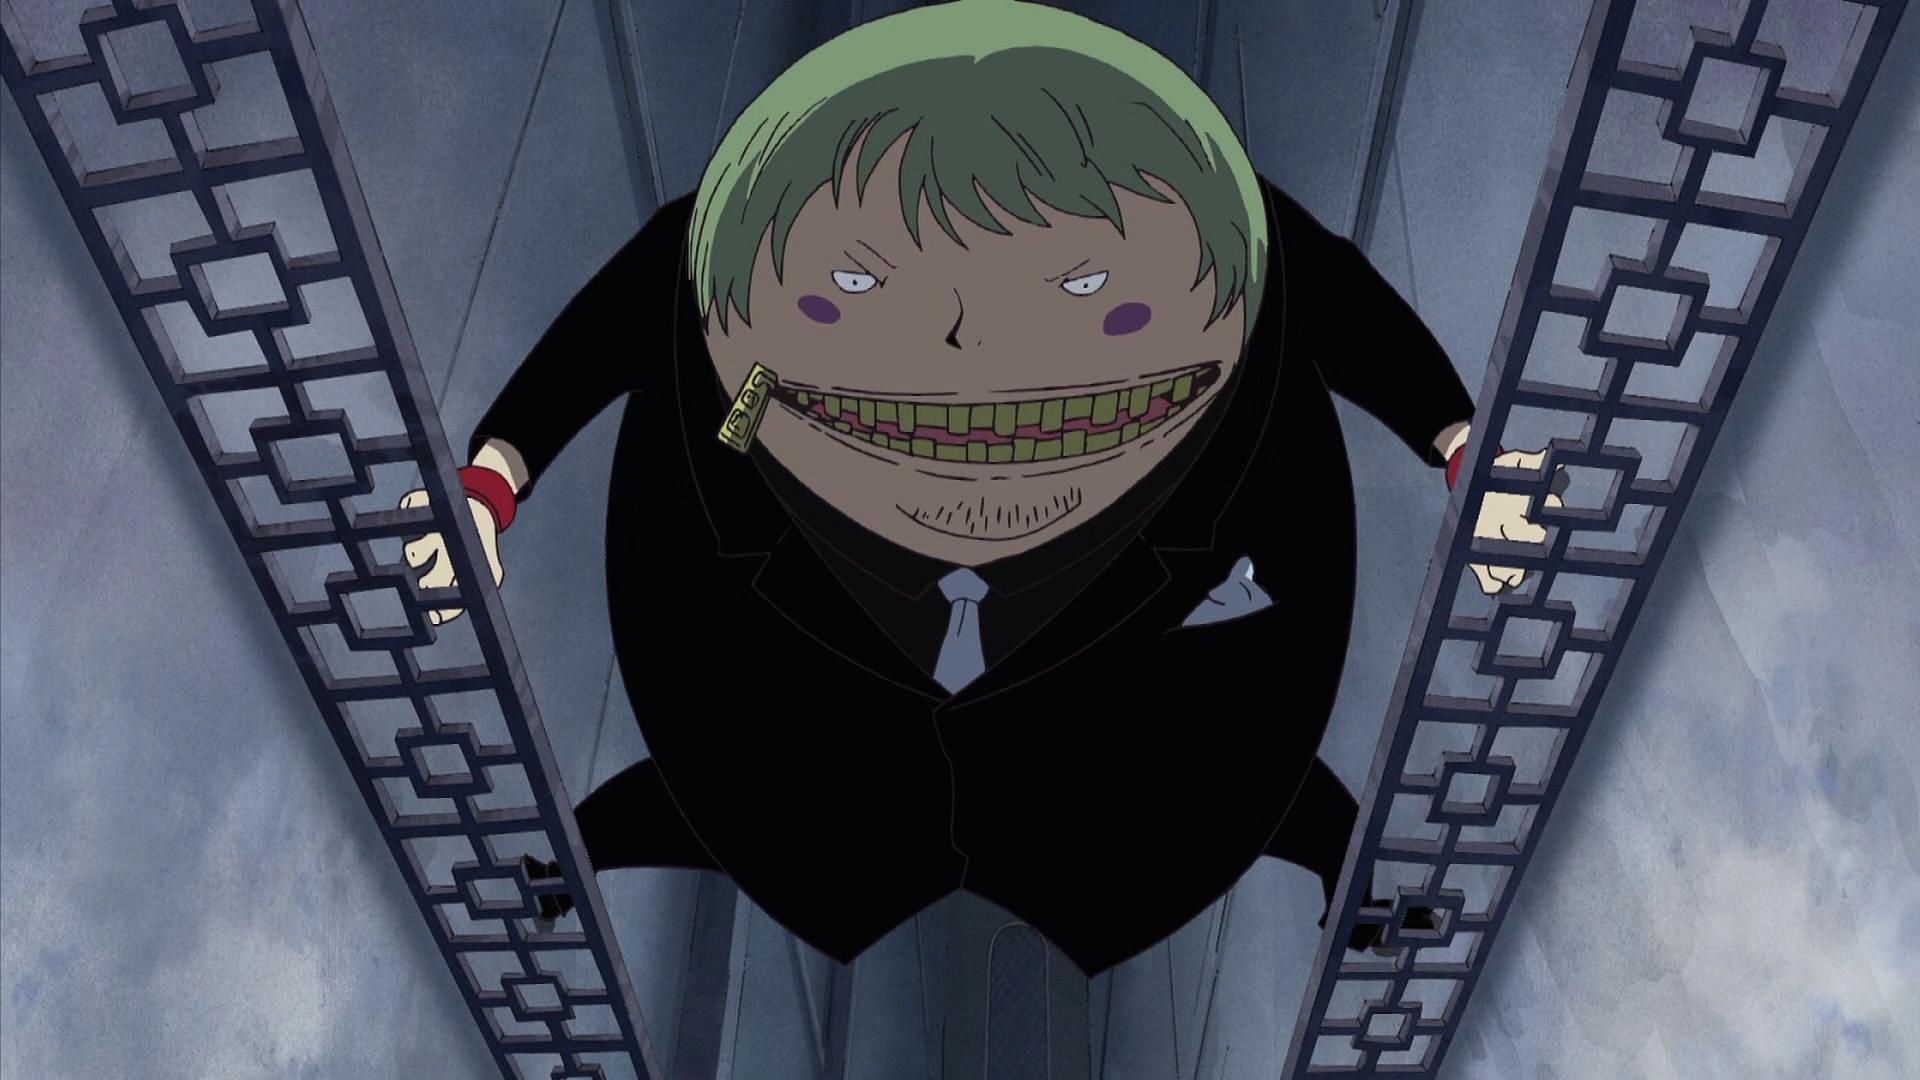 Fukuro as seen in the show (Image via Toei Animation)